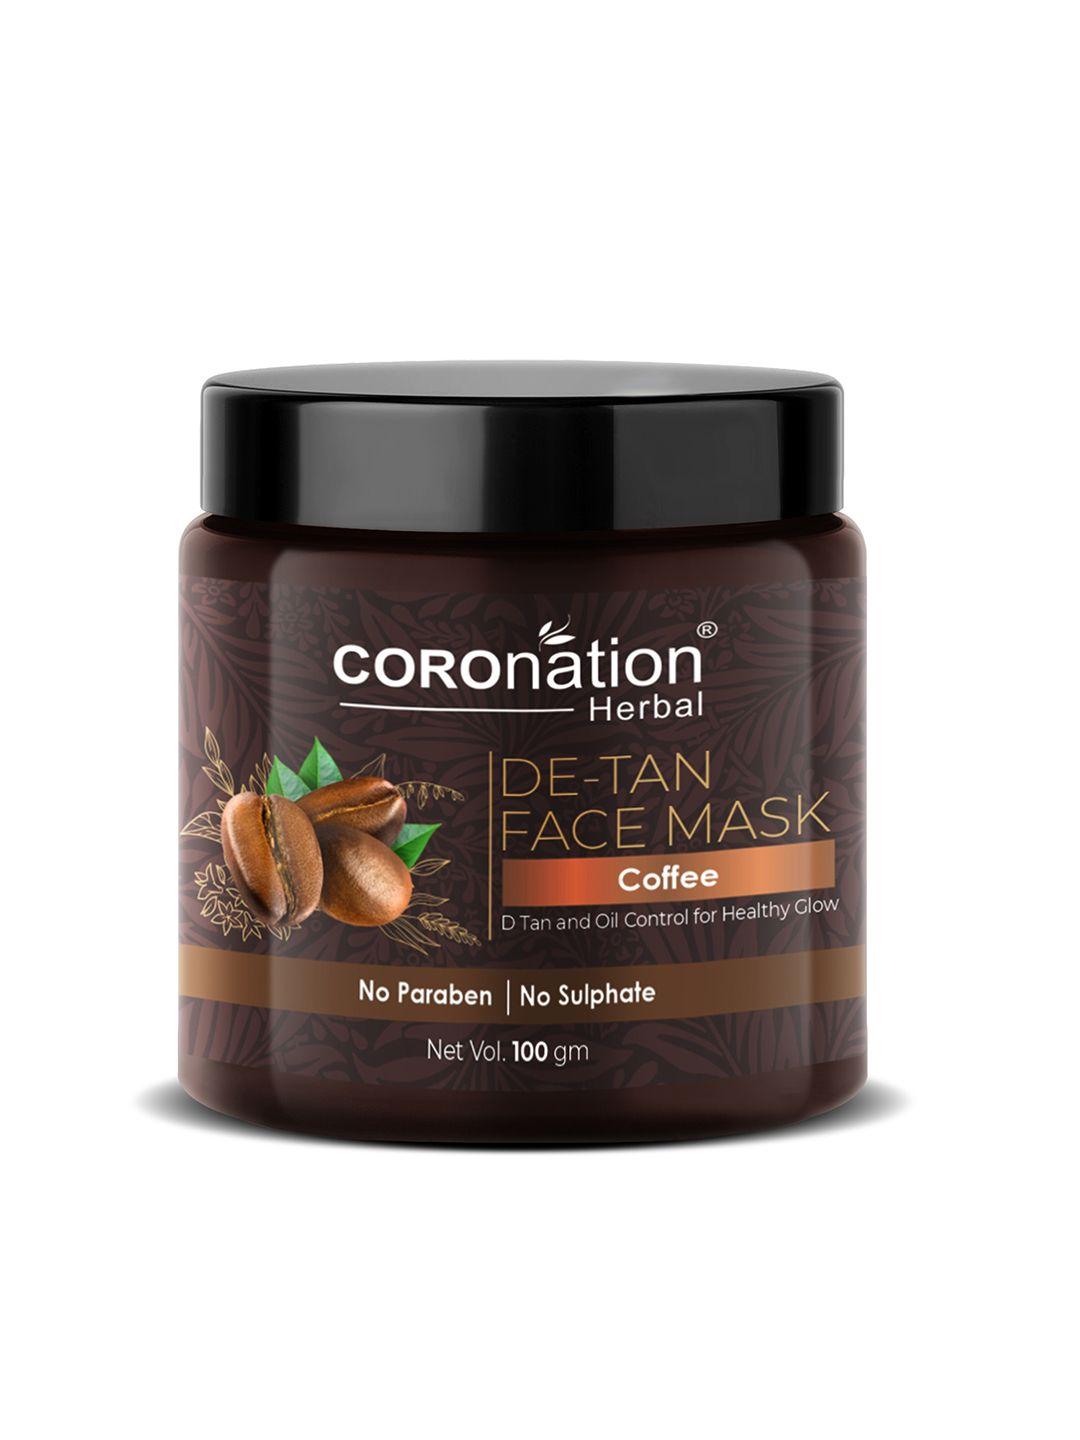 coronation herbal coffee de-tan face mask for healthy glow - 100 g